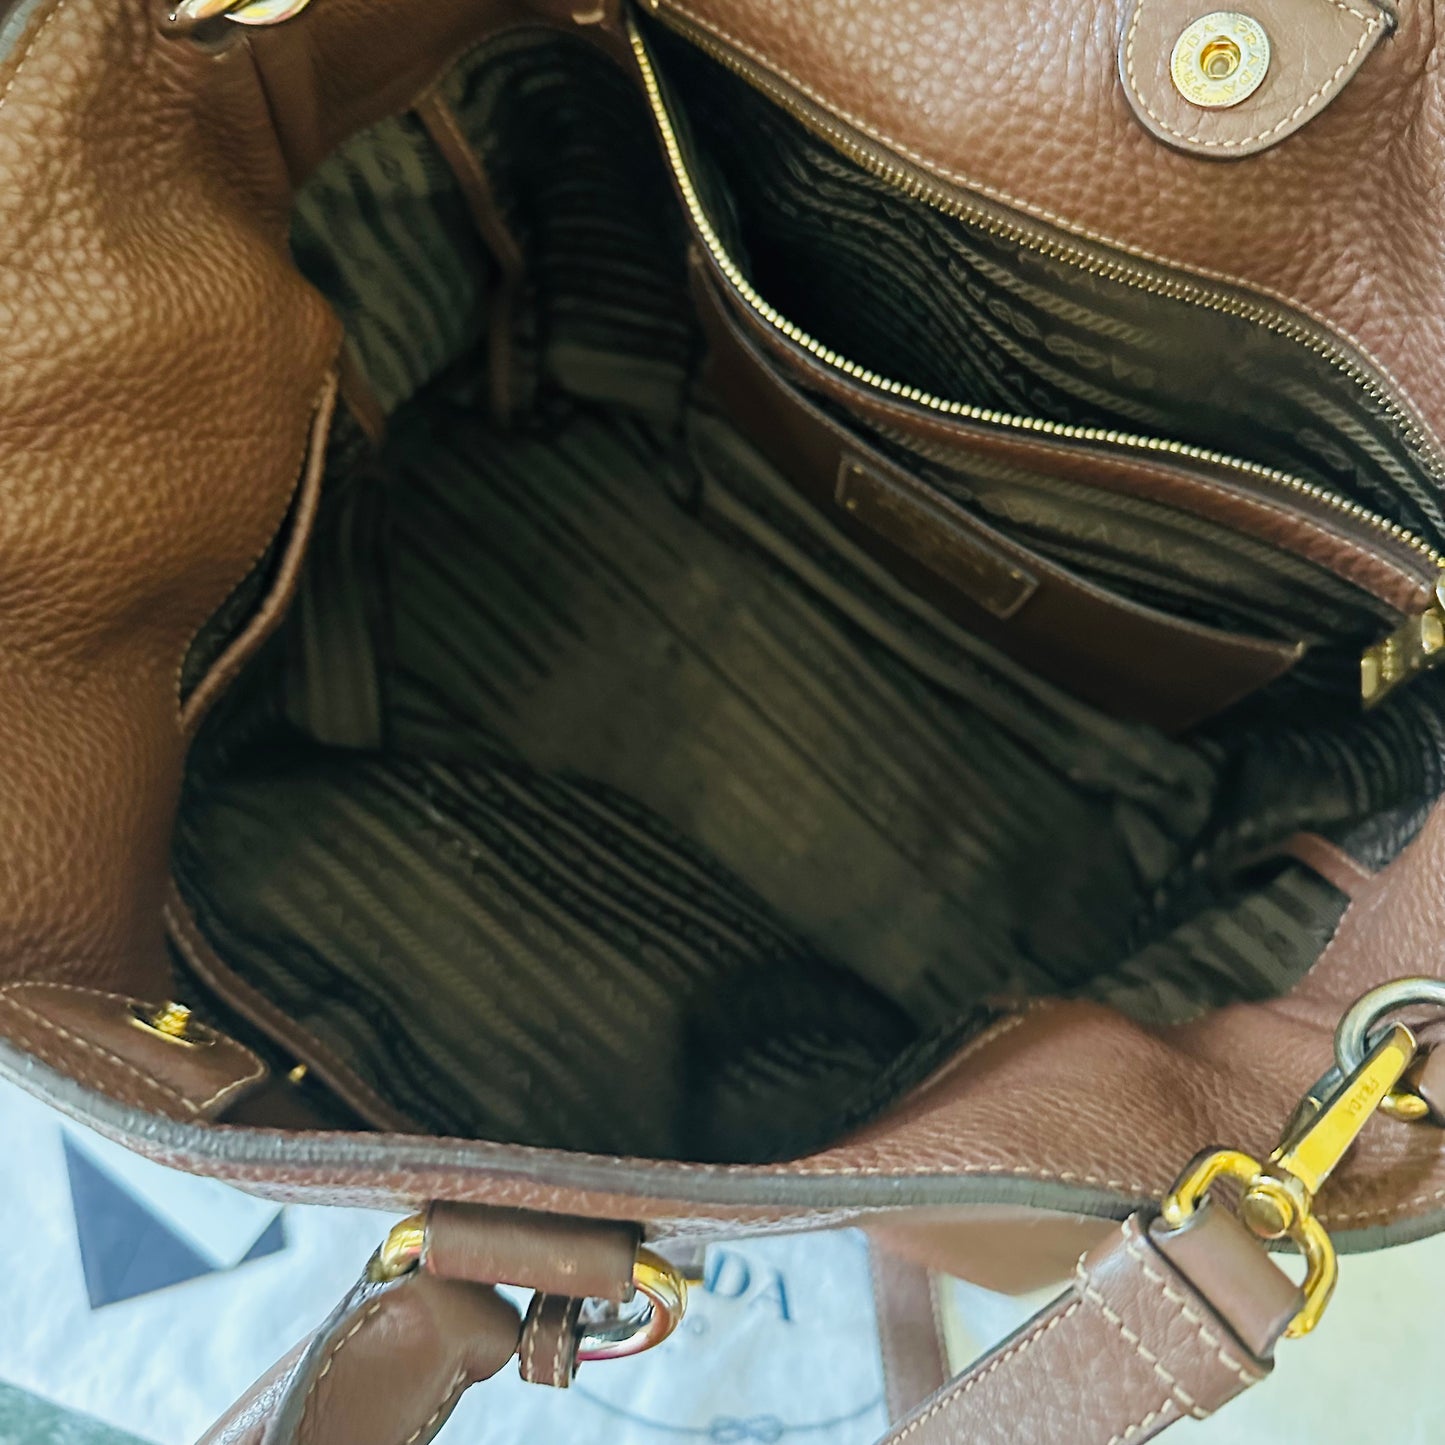 Prada Vitello Daino Satchel Bag in Brown Leather